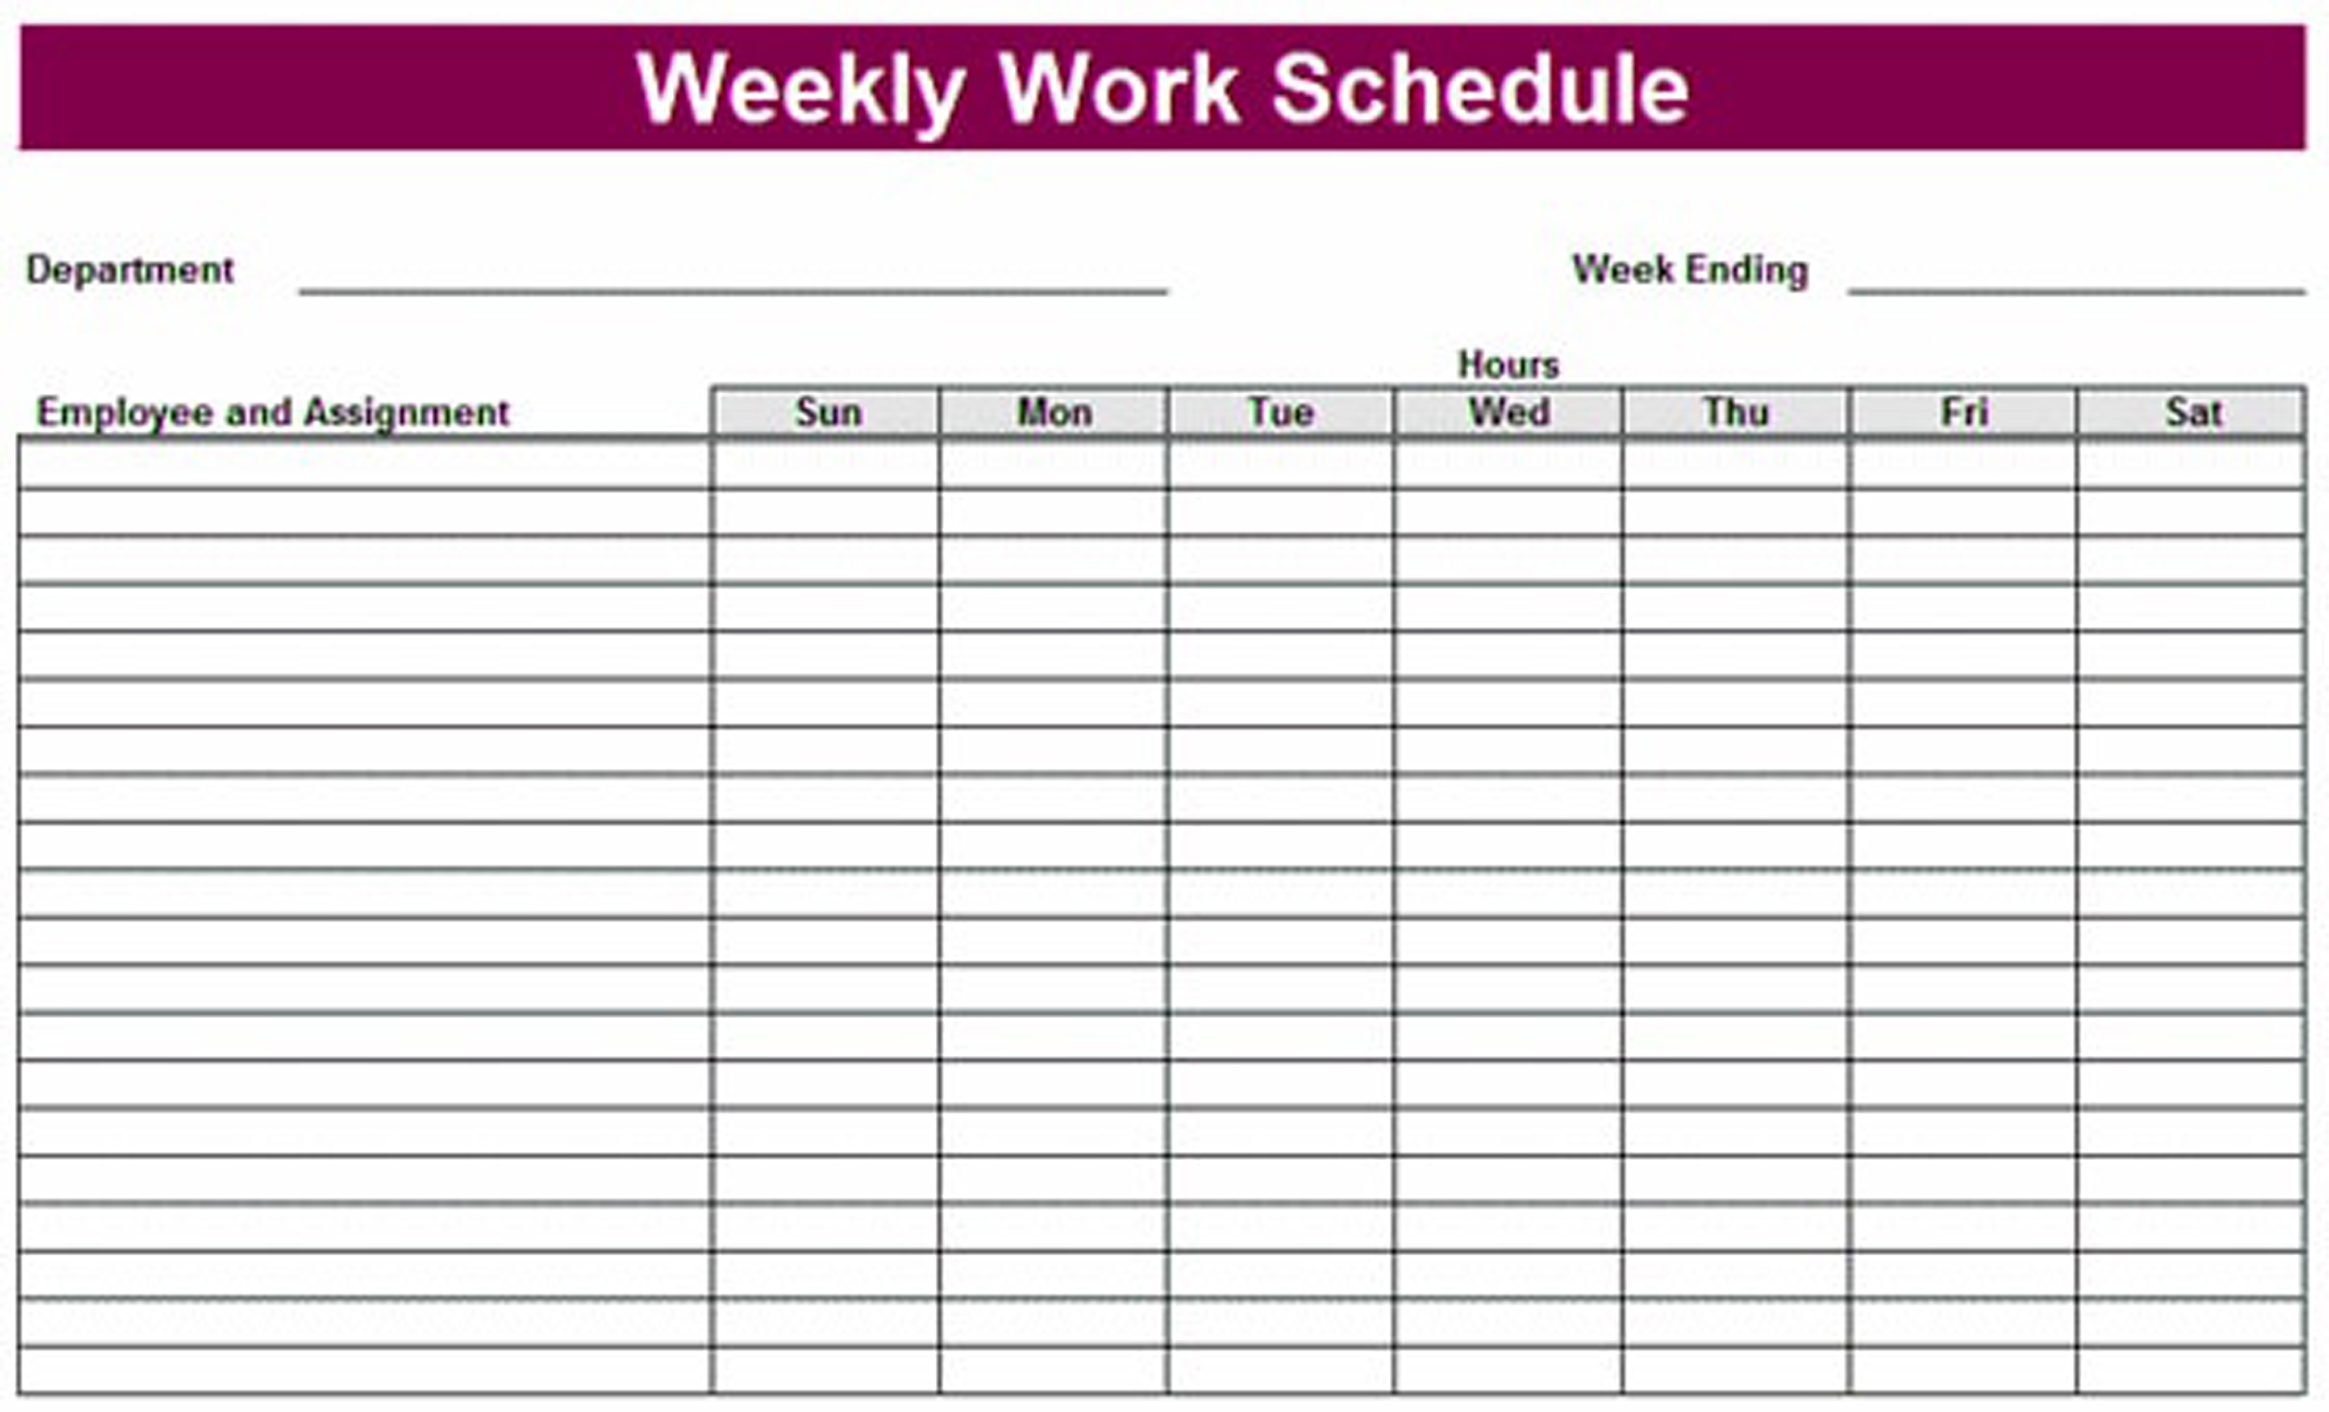 Weekly Calendar Planner Template Free Printable Online | Smorad with Free Online Printable Weekly Calendar